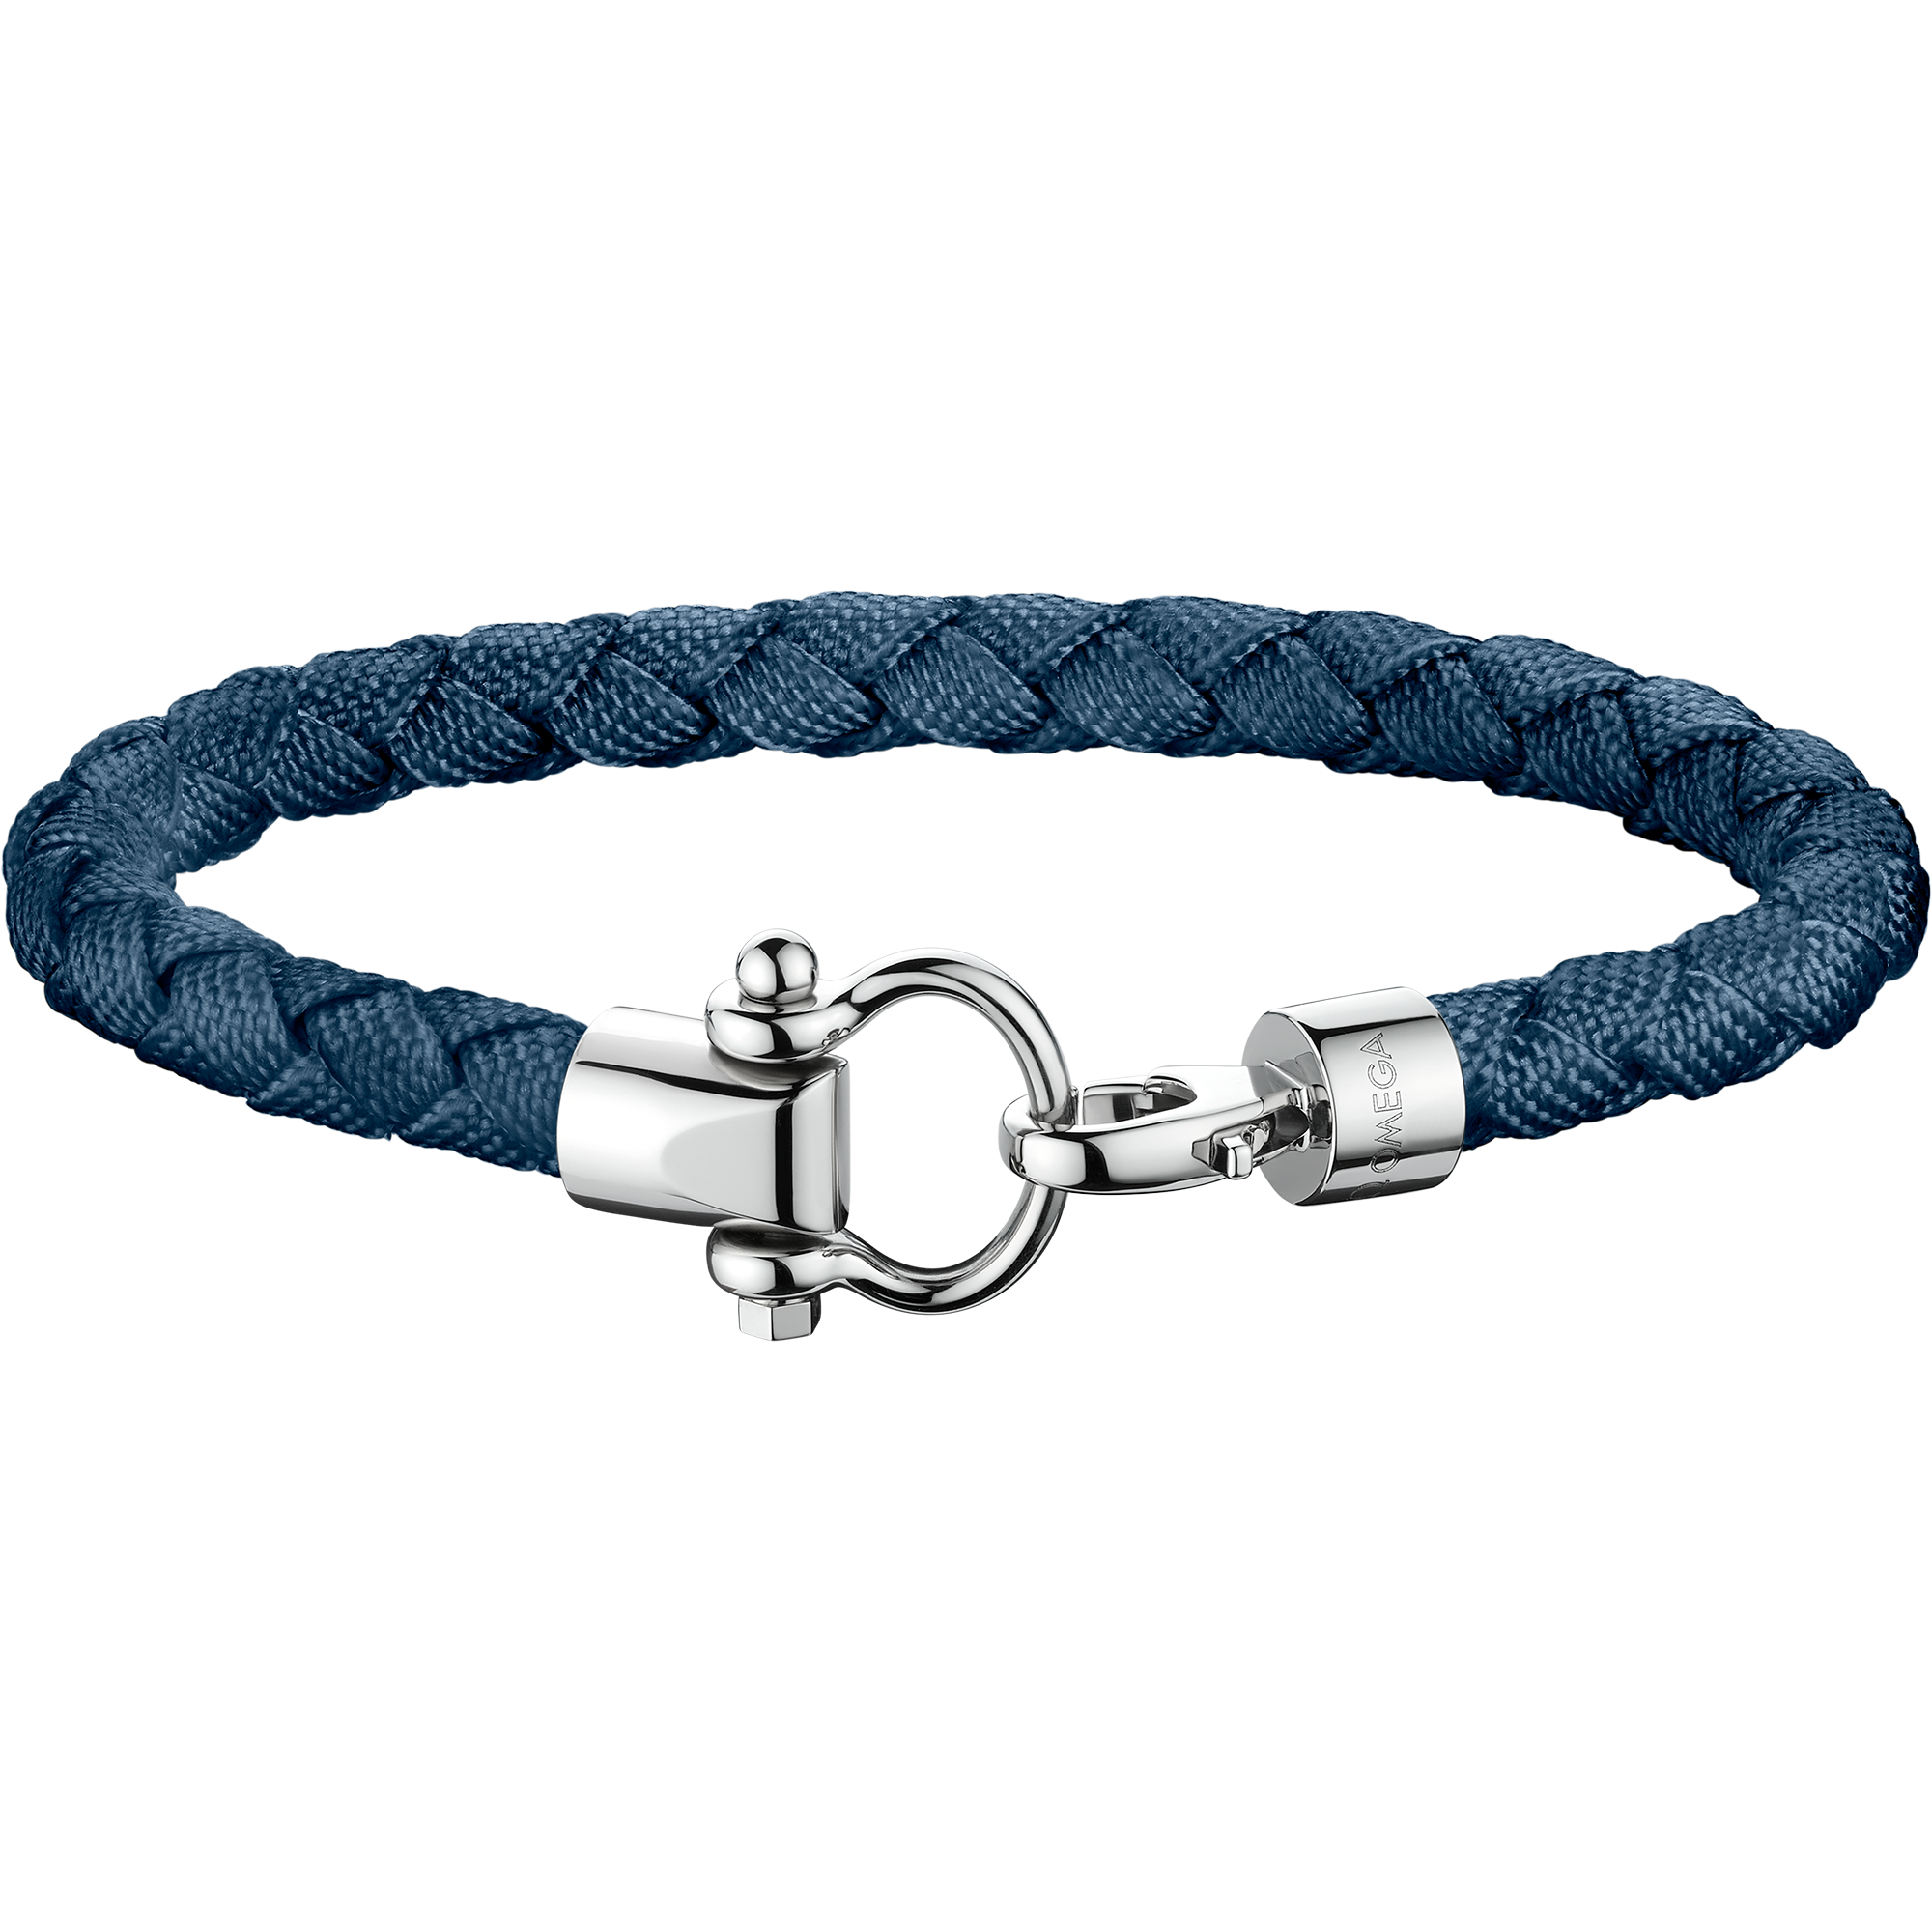 Omega Aqua Sailing Bracelet, Blue braided nylon, Stainless steel - BA05CW00003R2